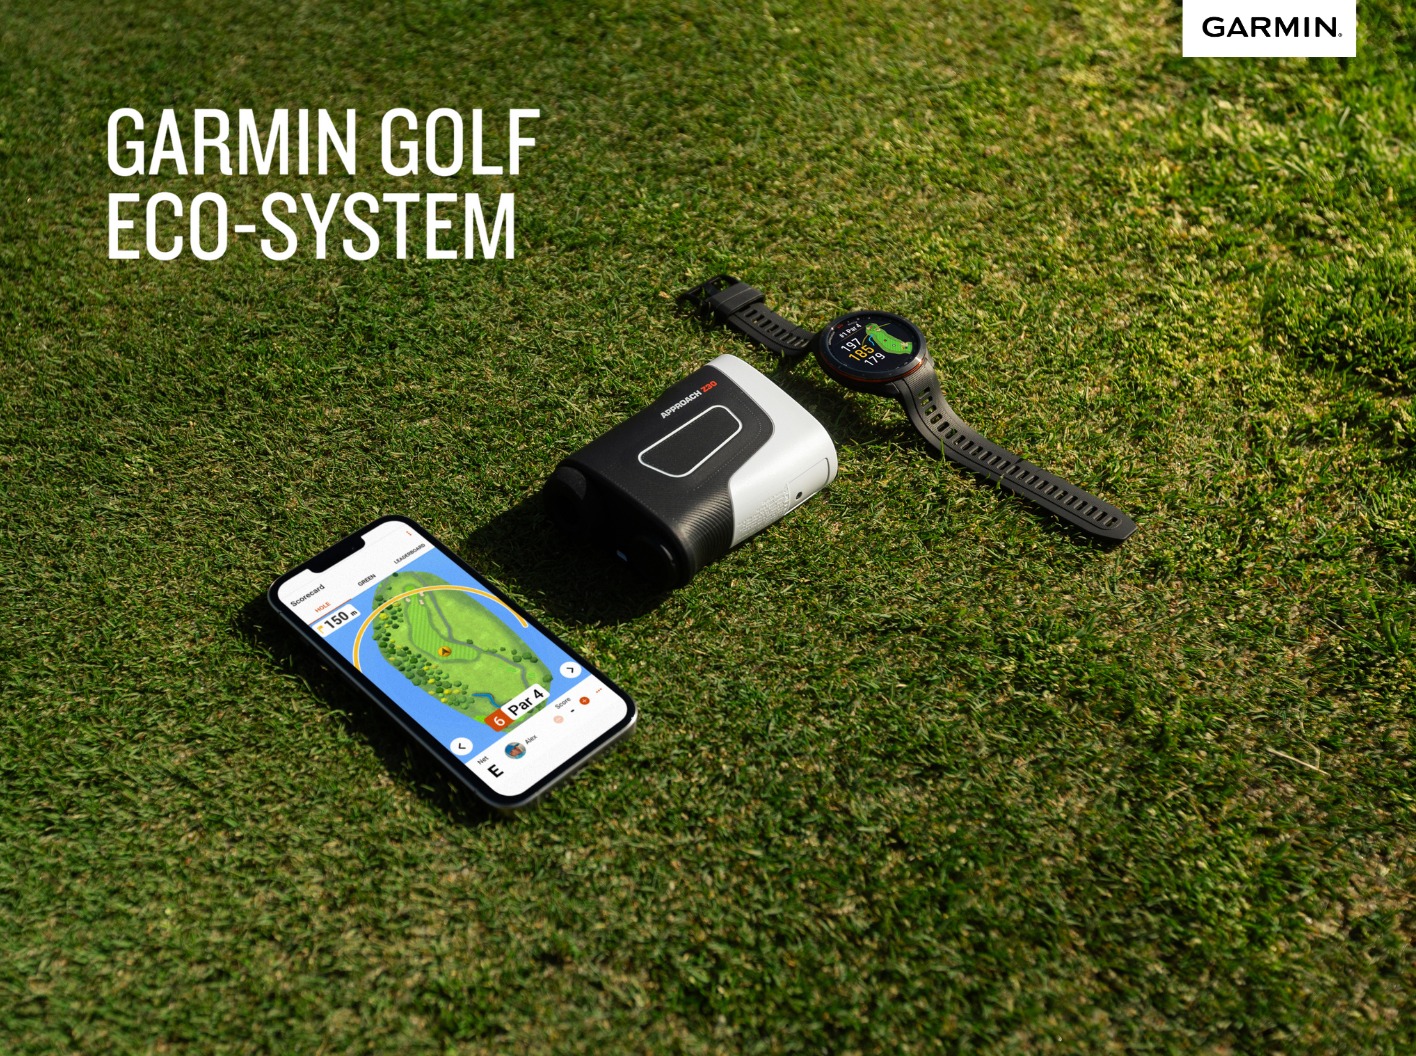 Manfaatkan 'Demam Golf', Garmin Luncurkan Range Finder Approach Z30